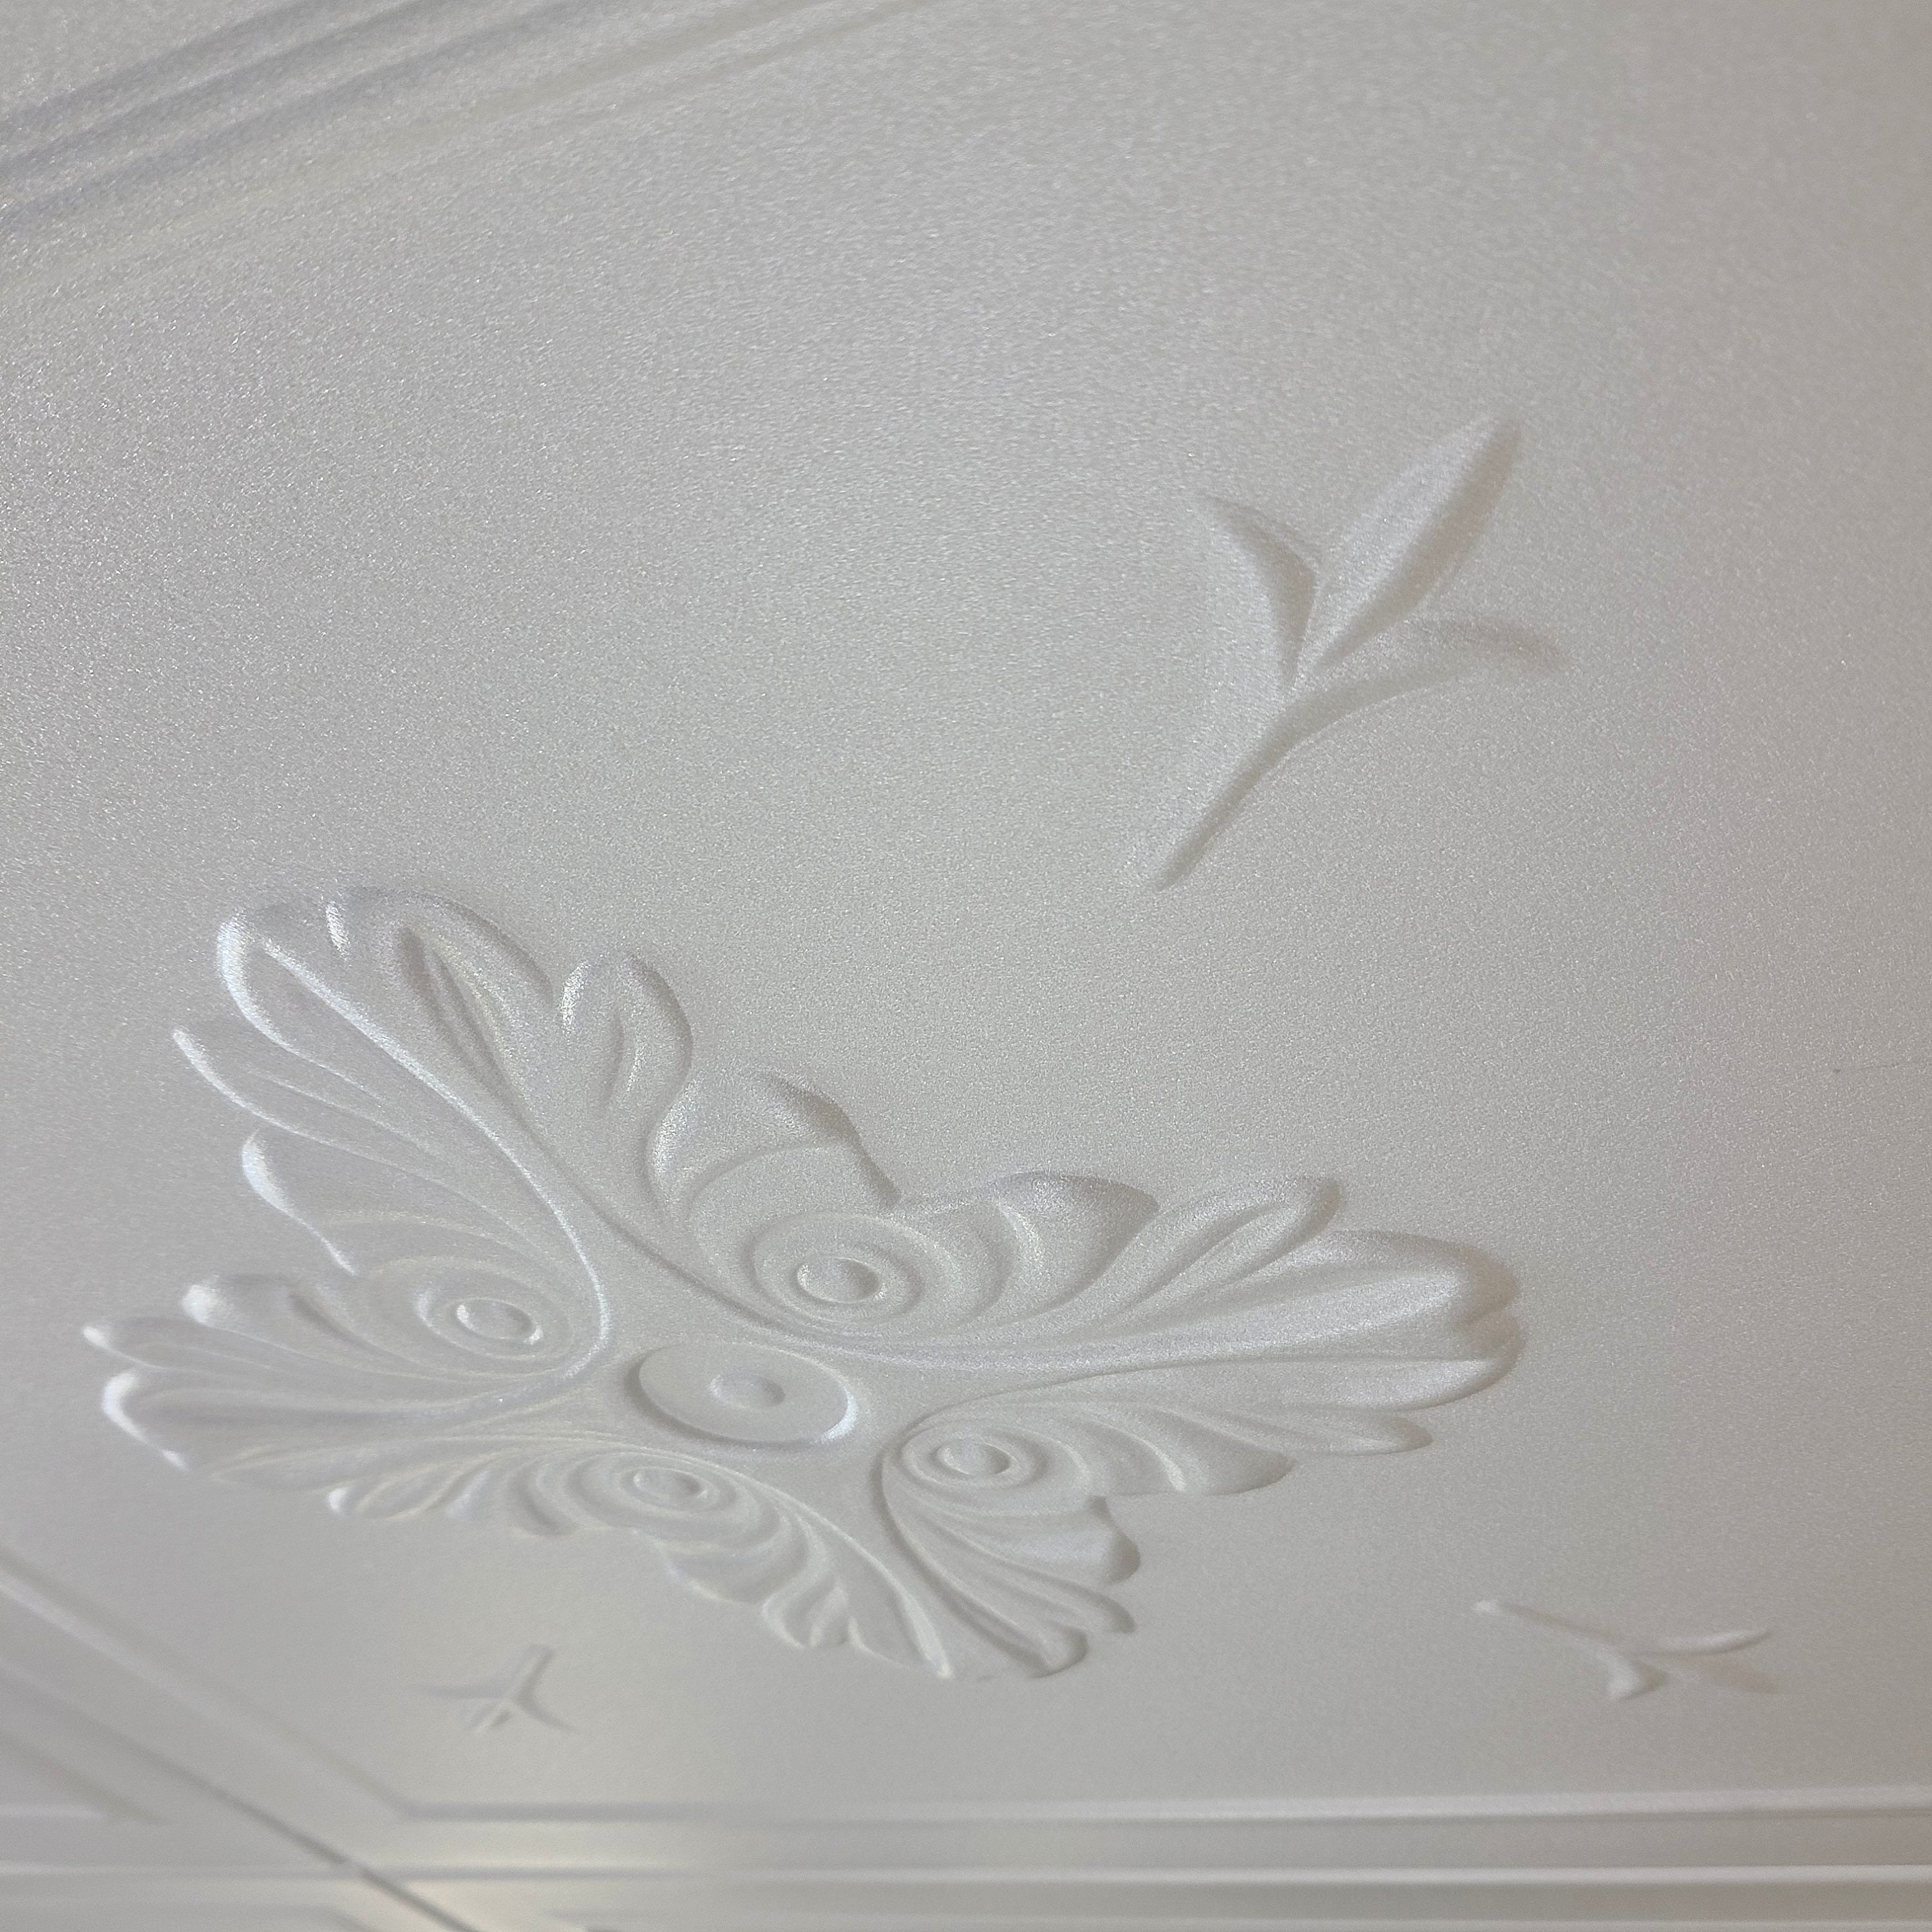 STYRO PRO Styrofoam Ceiling Tiles in Floral Design picture